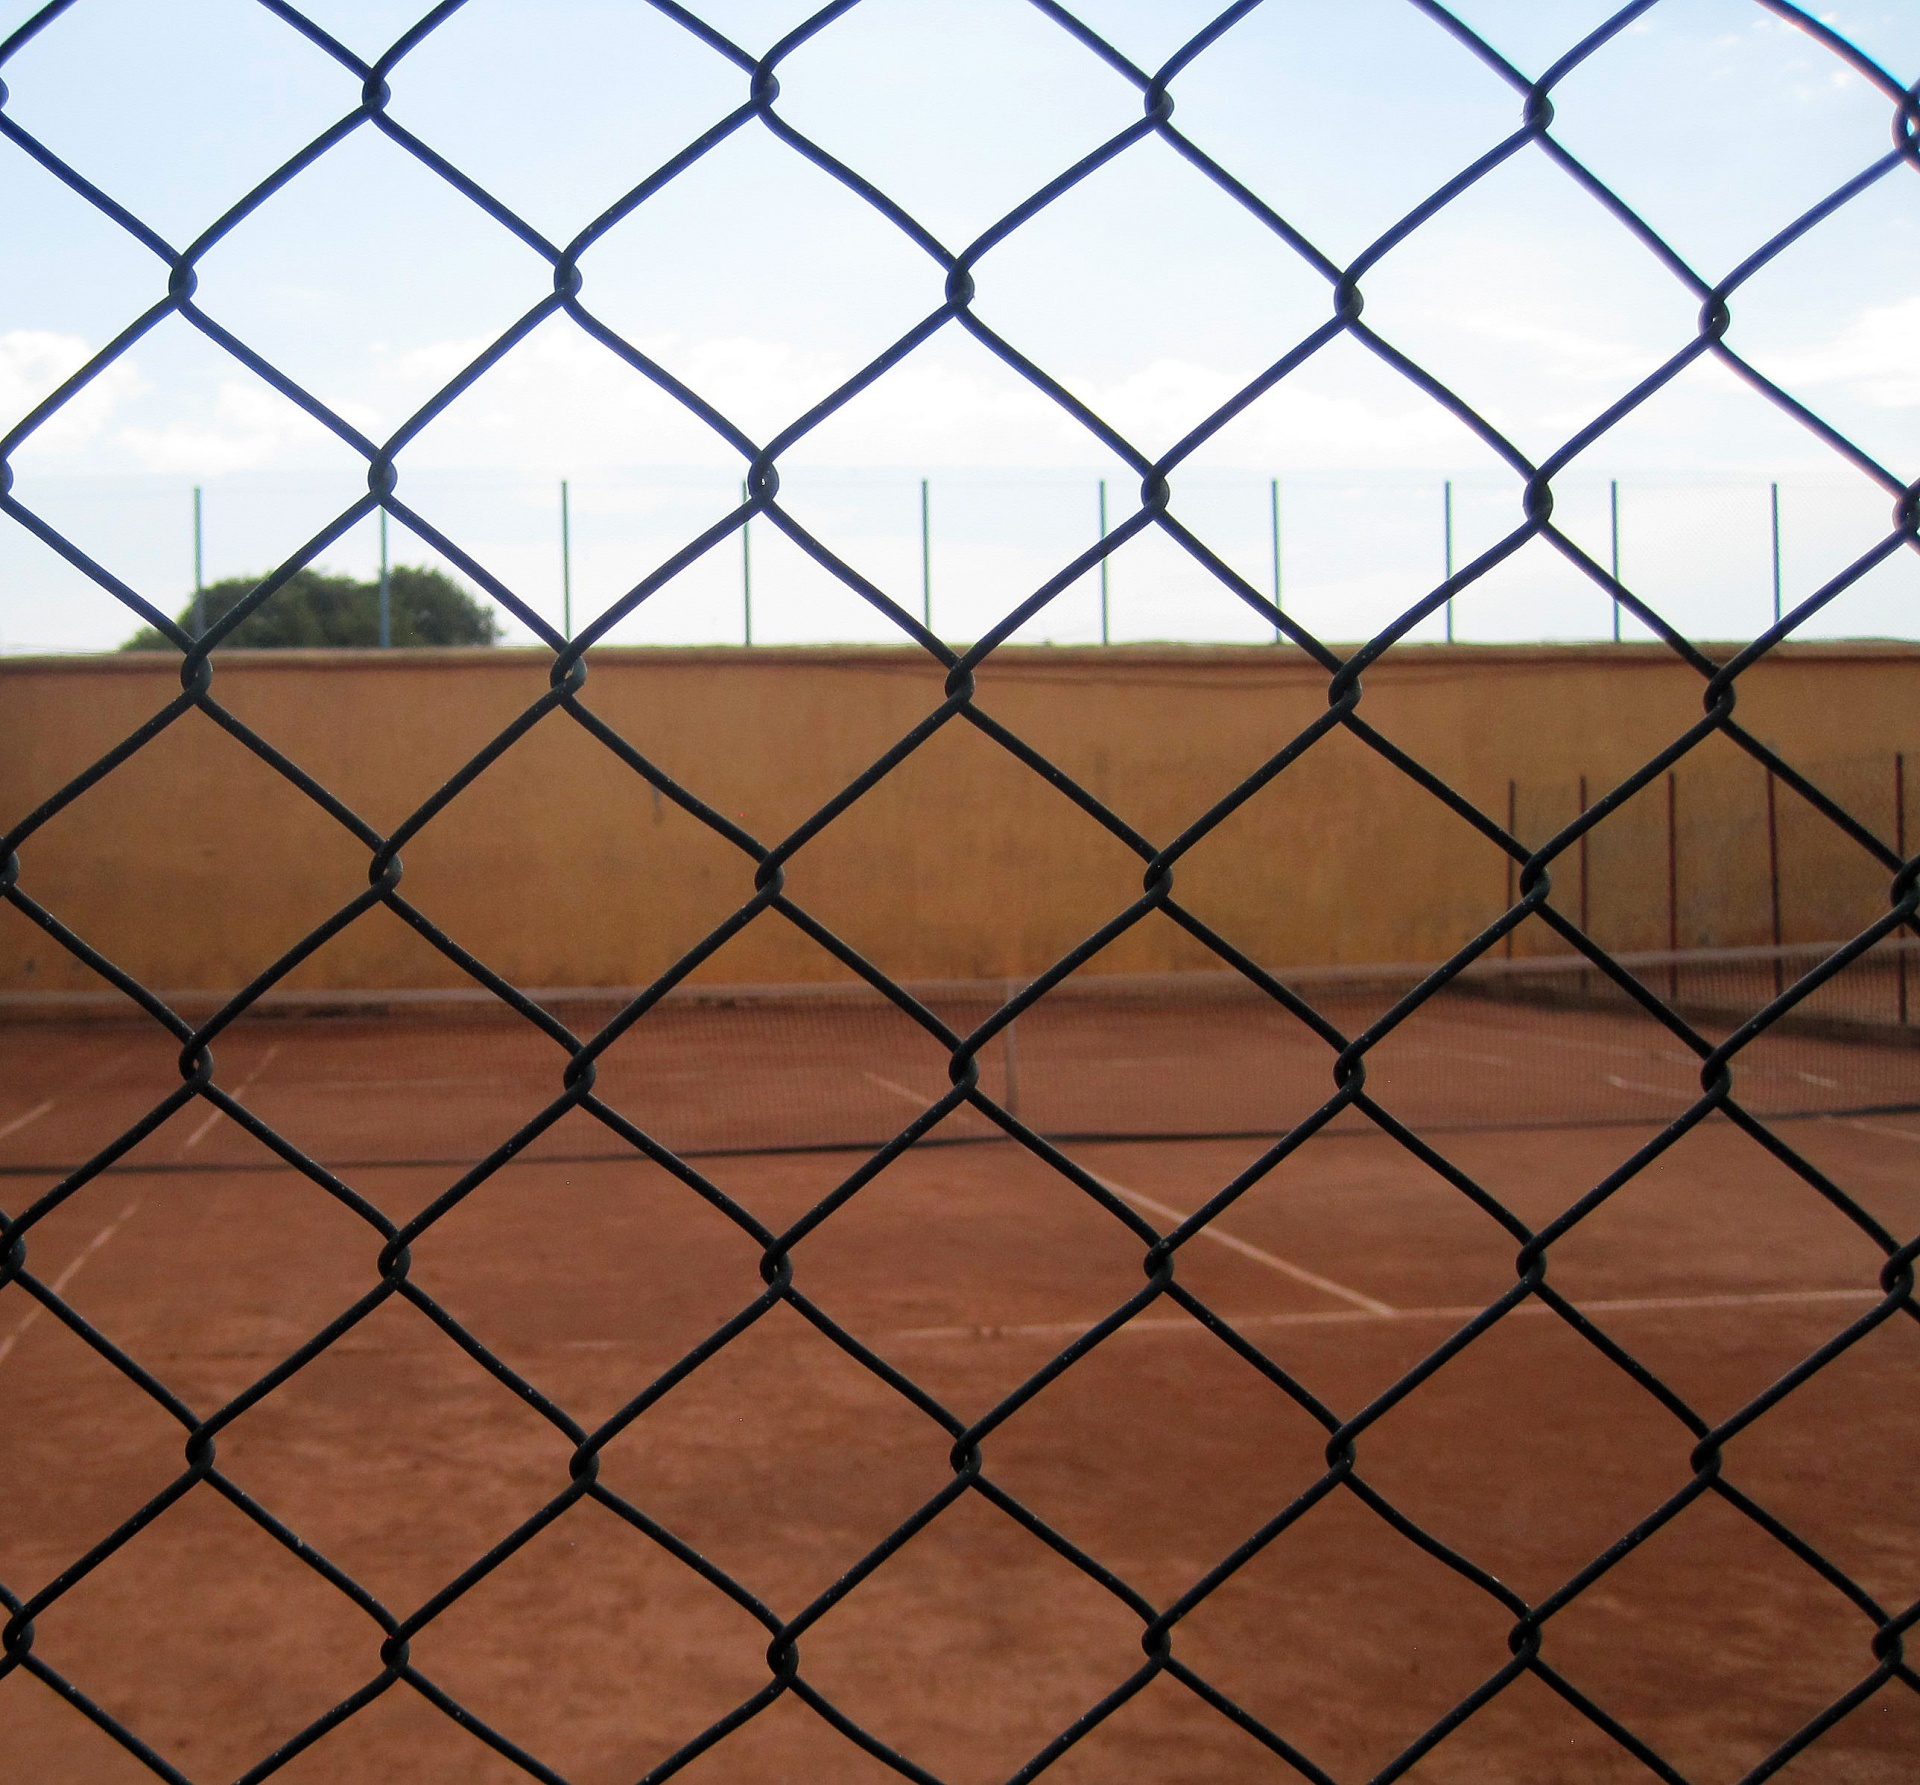 game tennis court free photo